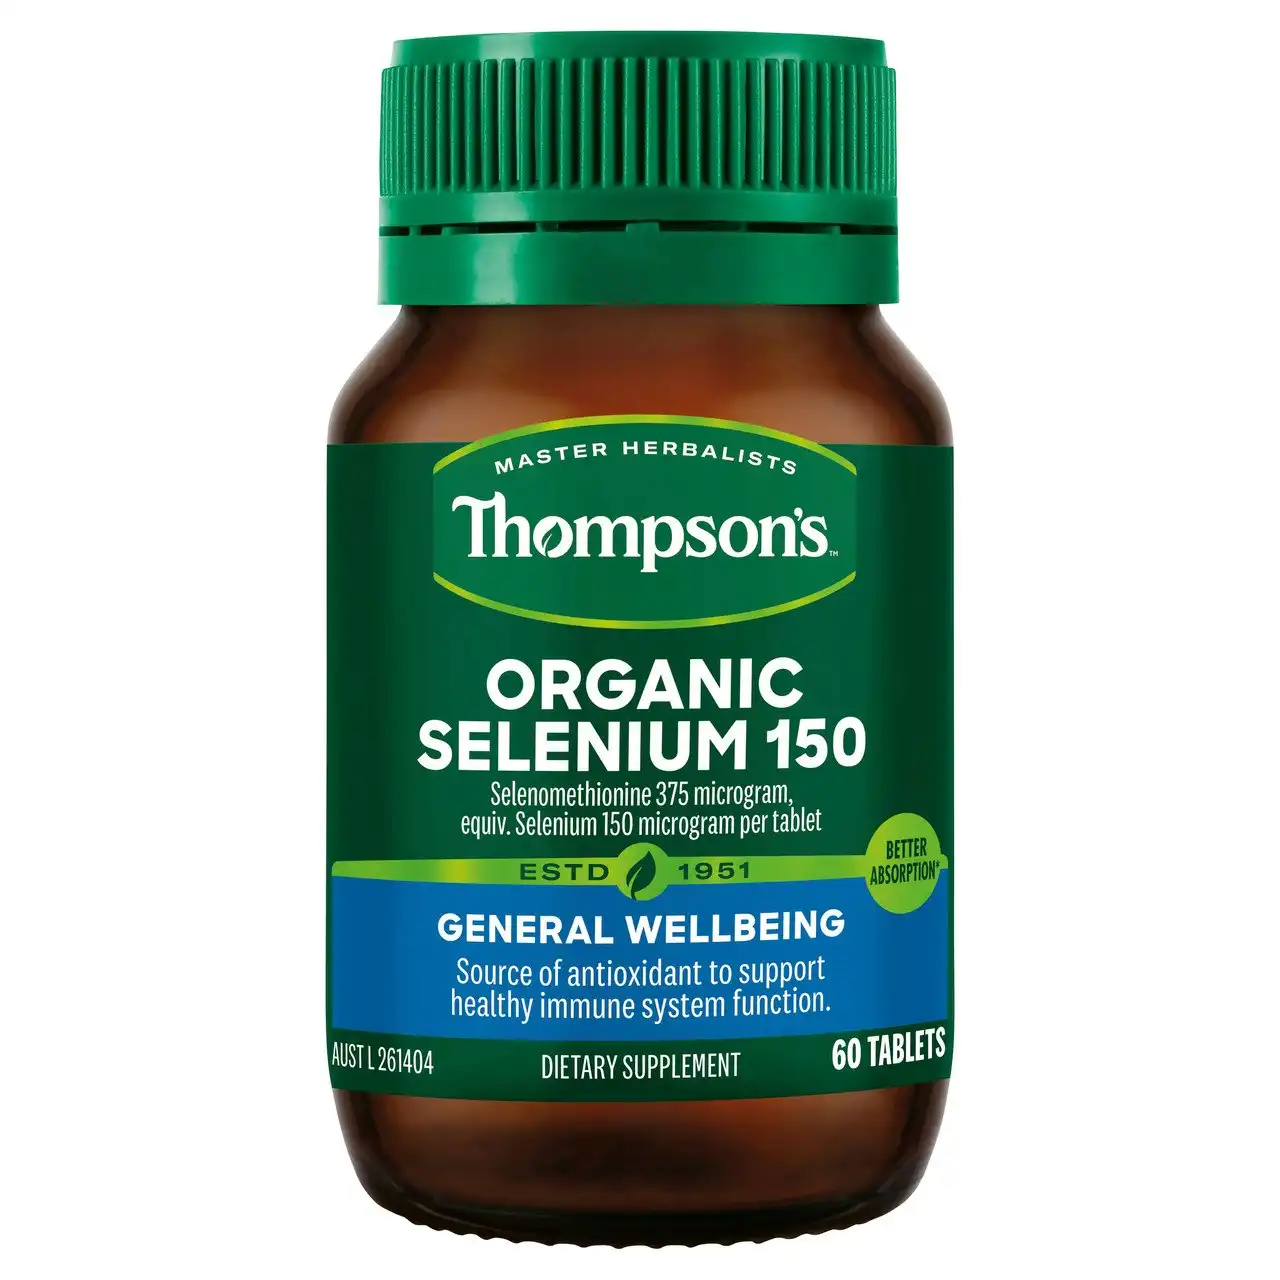 Thompson's Organic Selenium 150 60 tablets